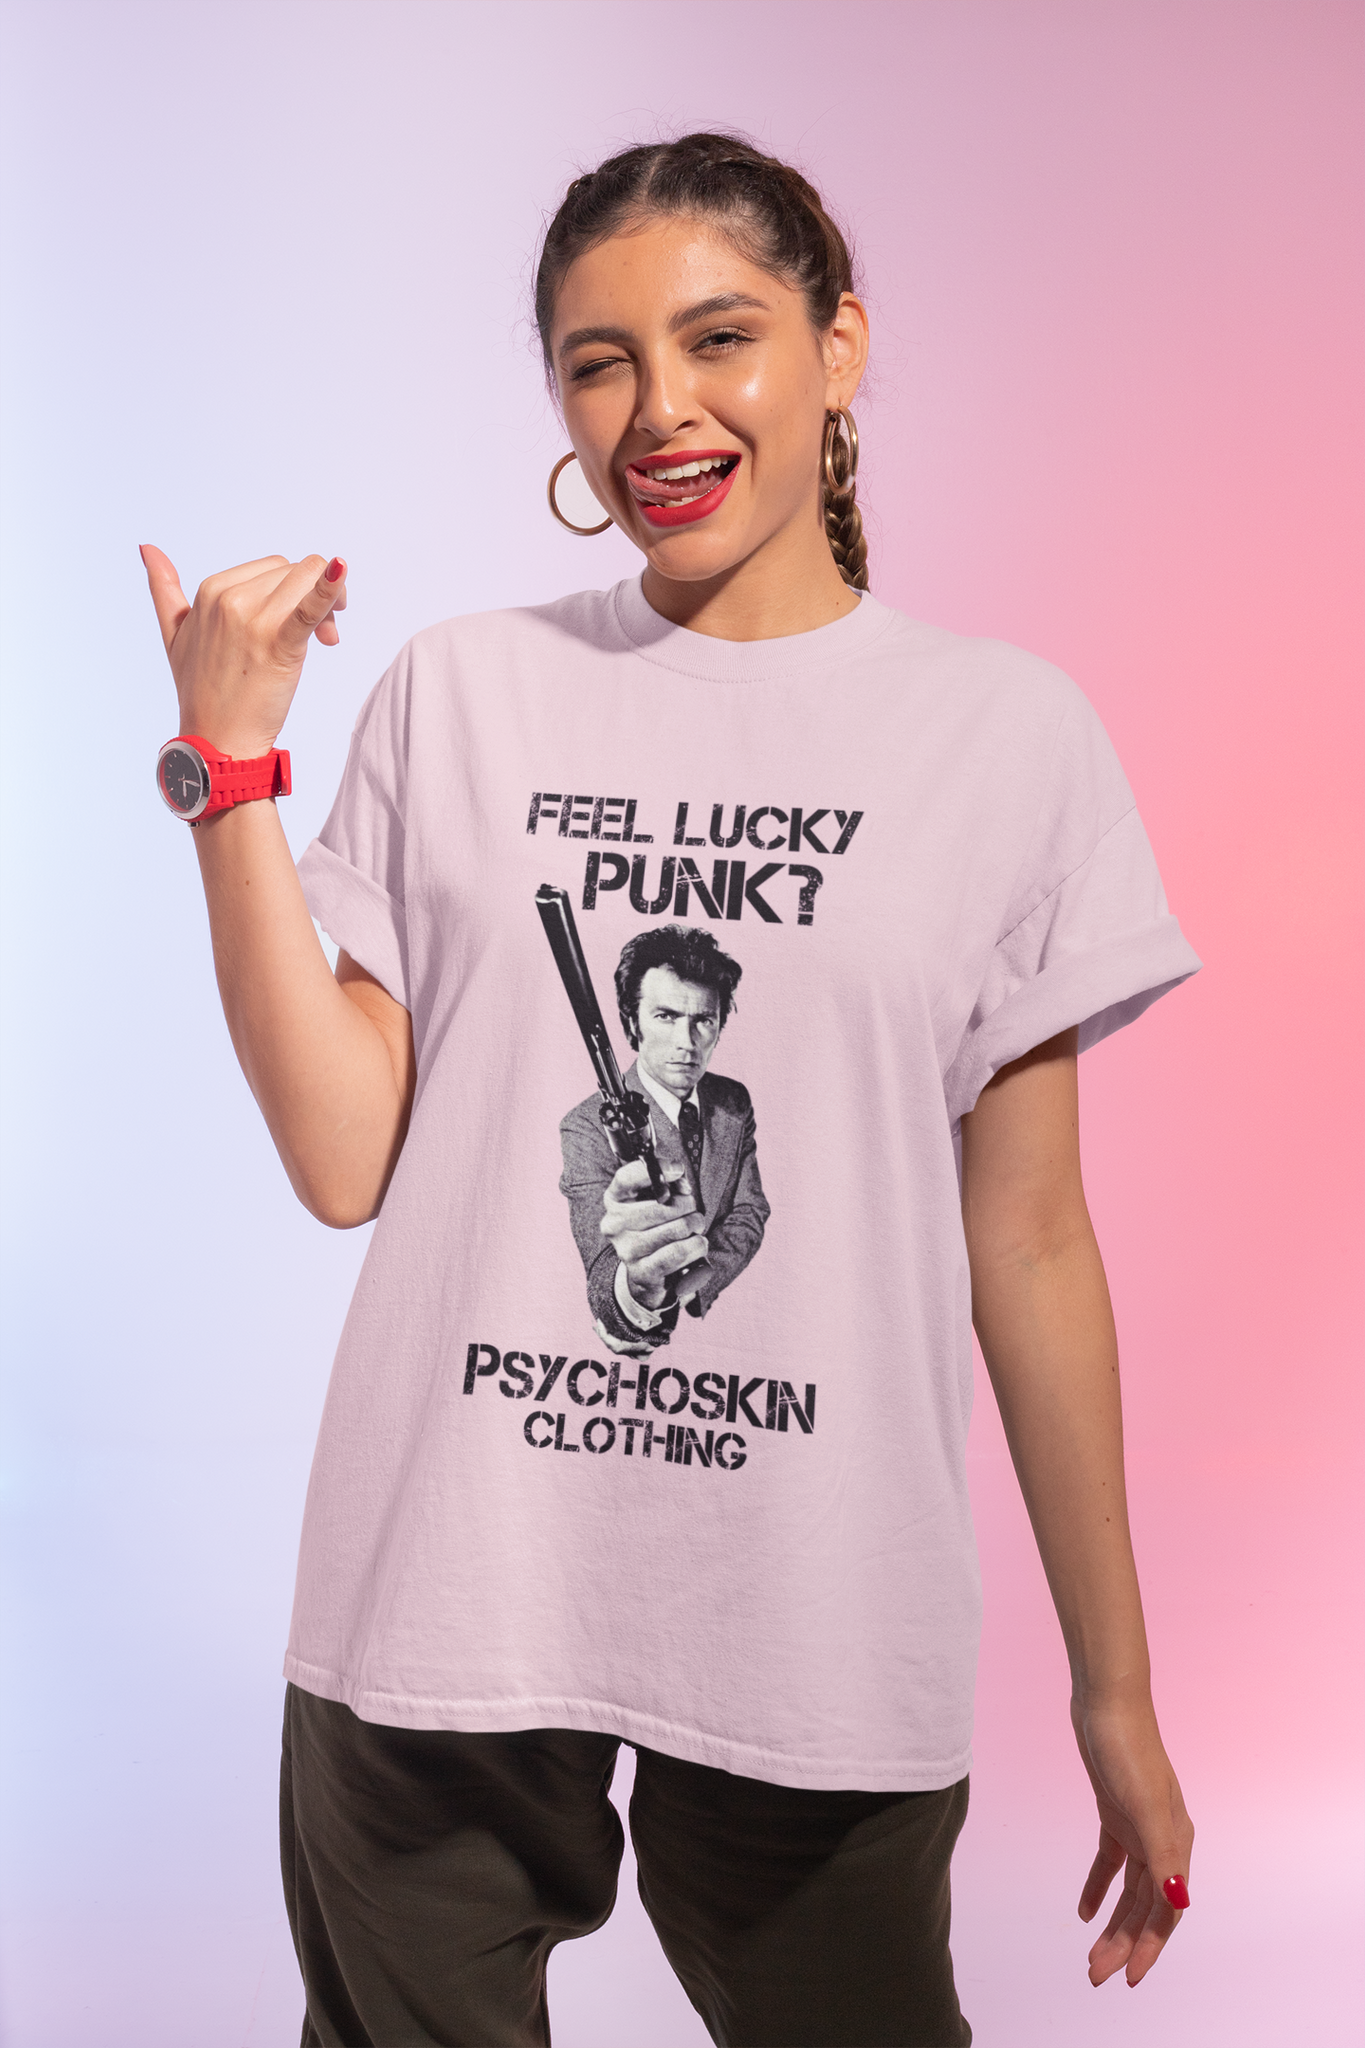 Dirty Harry T Shirt, Harry Callahan T Shirt, Feel Lucky Punk Psychoskin Clothing Tshirt